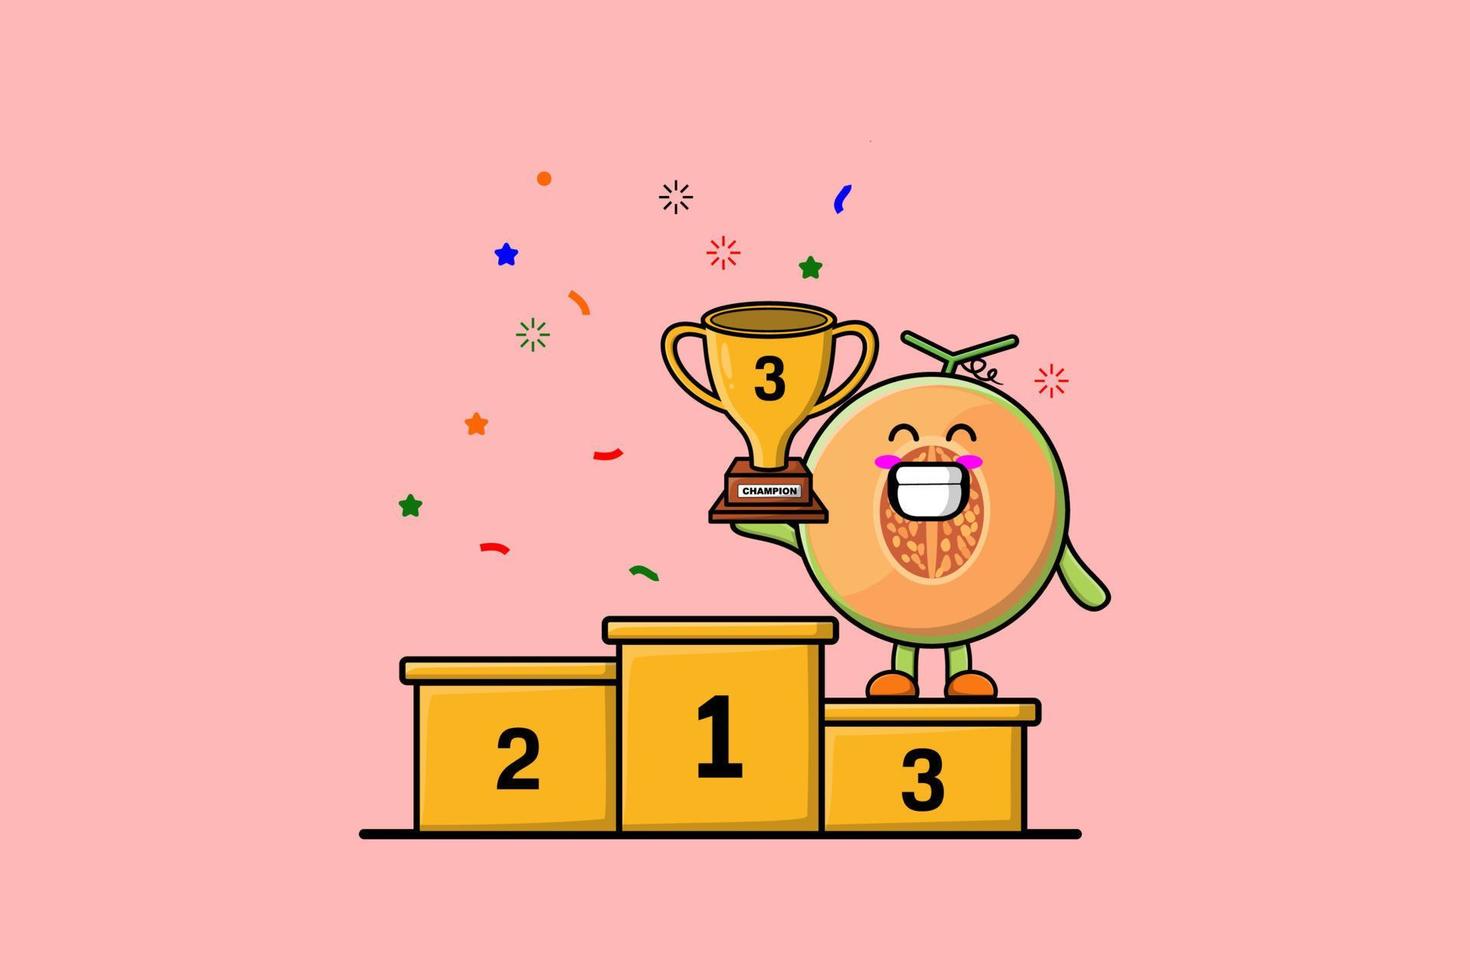 Cute cartoon Melon character as the third winner vector